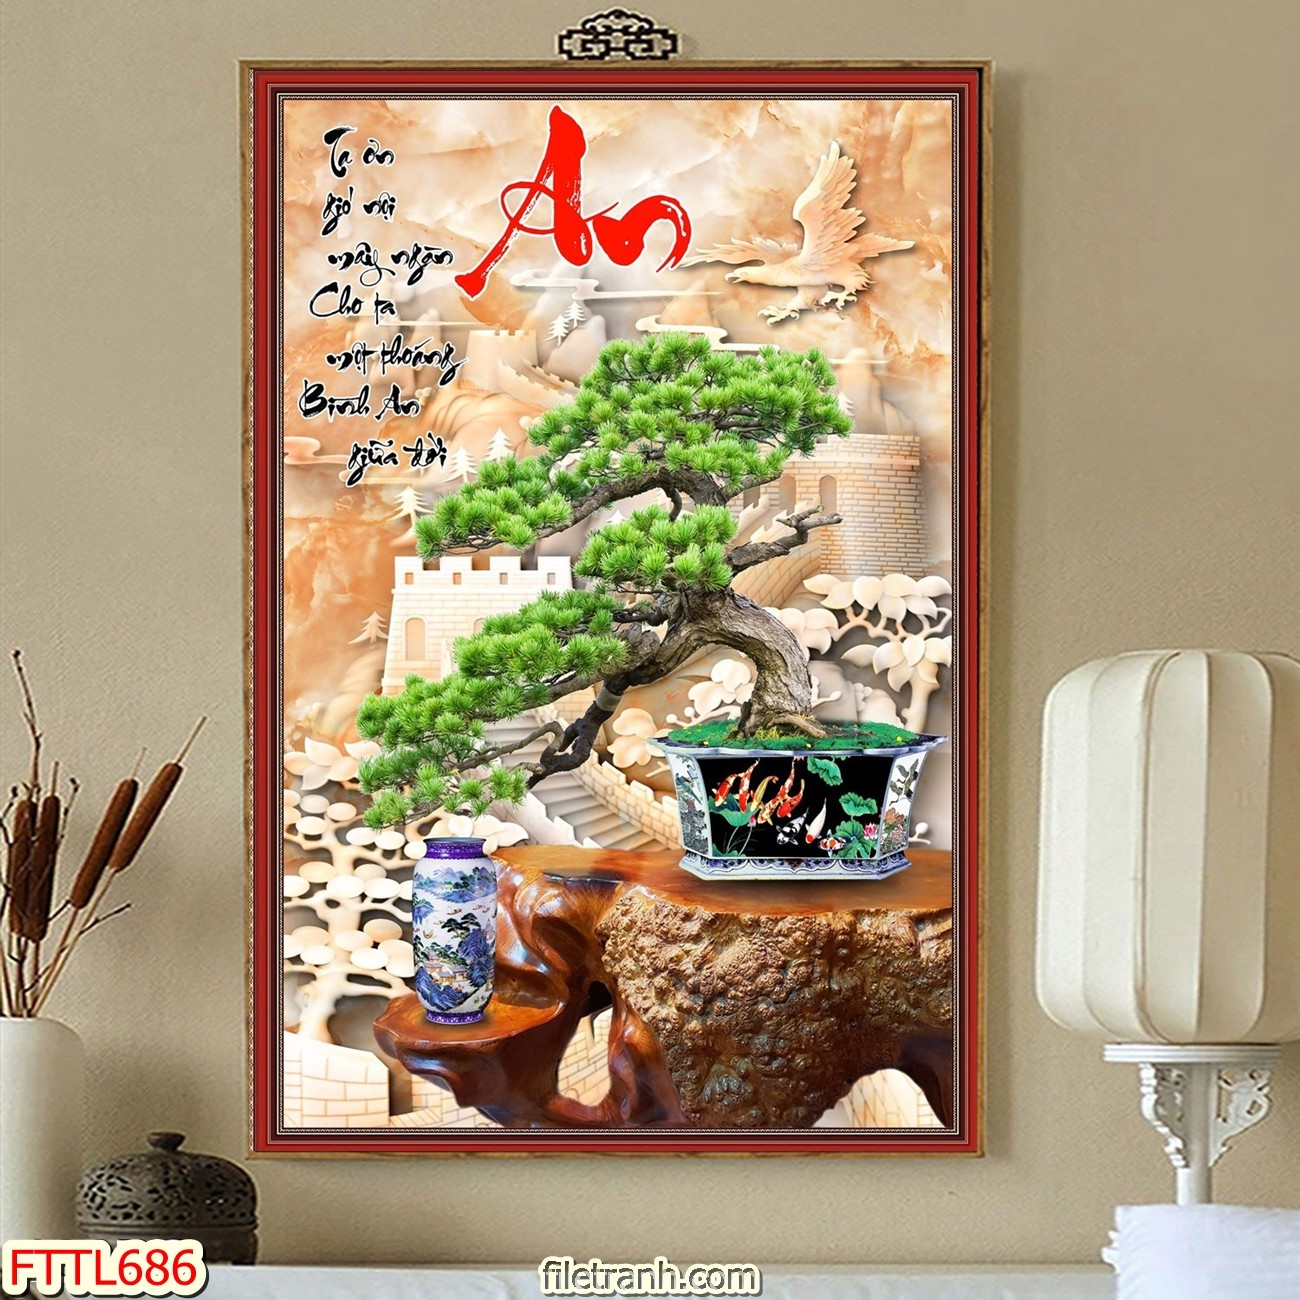 https://filetranh.com/file-tranh-chau-mai-bonsai/file-tranh-chau-mai-bonsai-fttl686.html